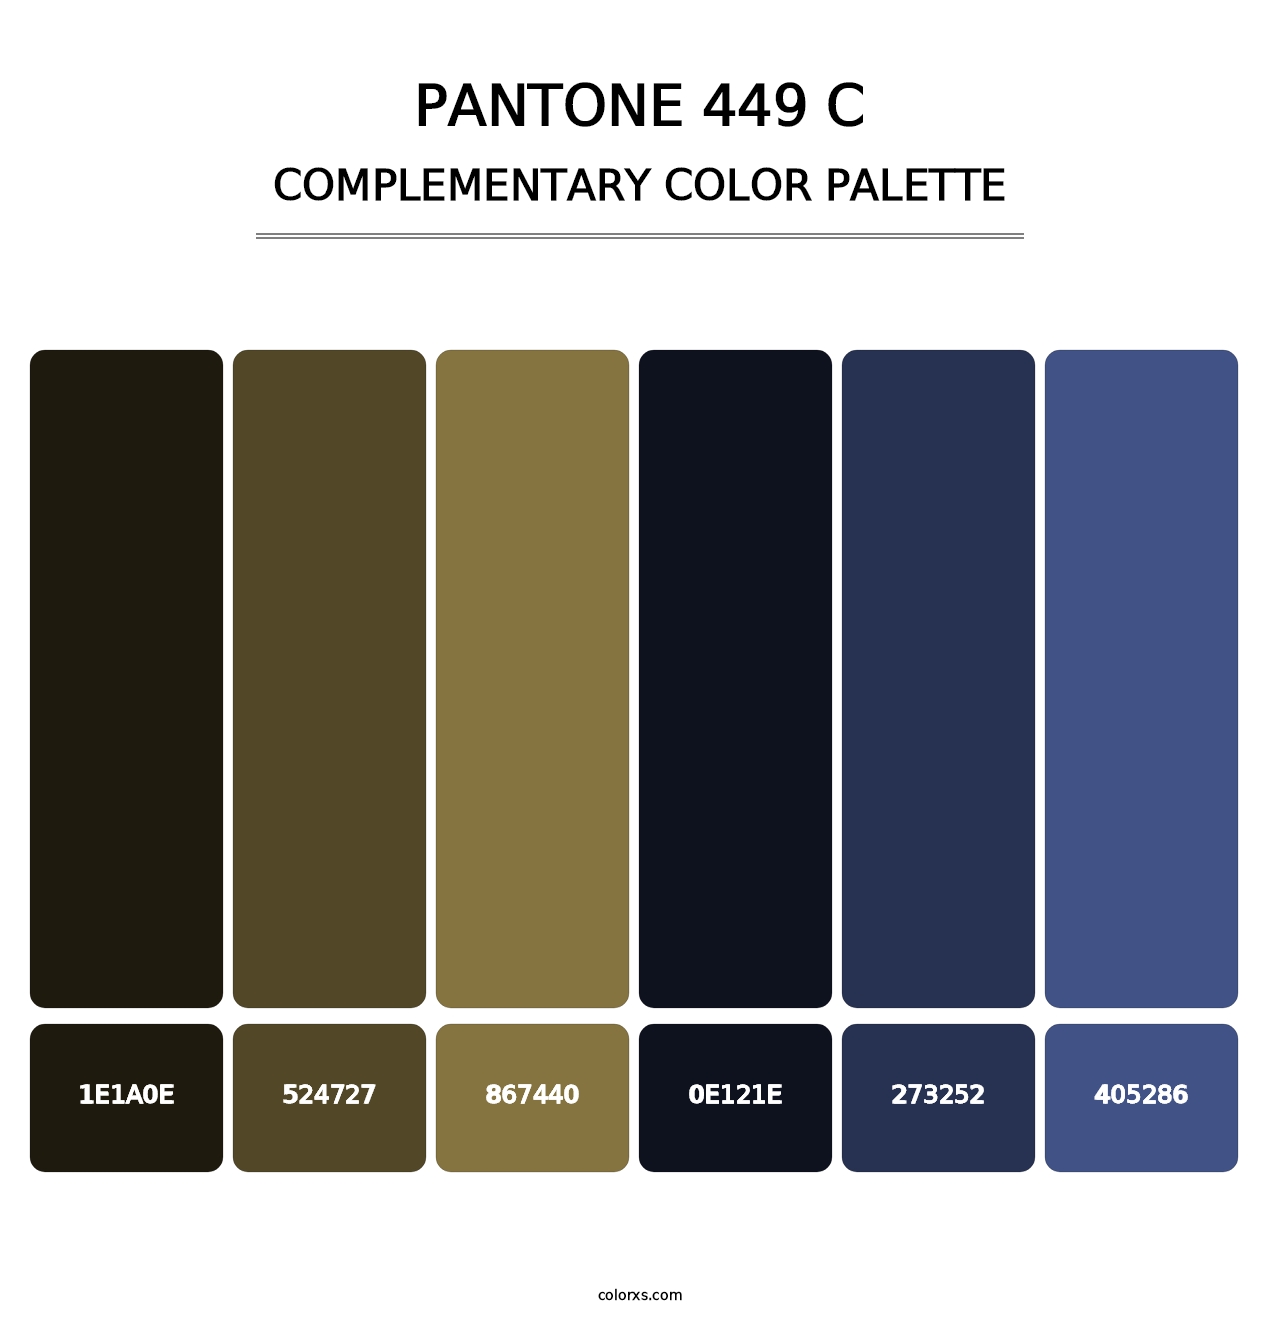 PANTONE 449 C - Complementary Color Palette